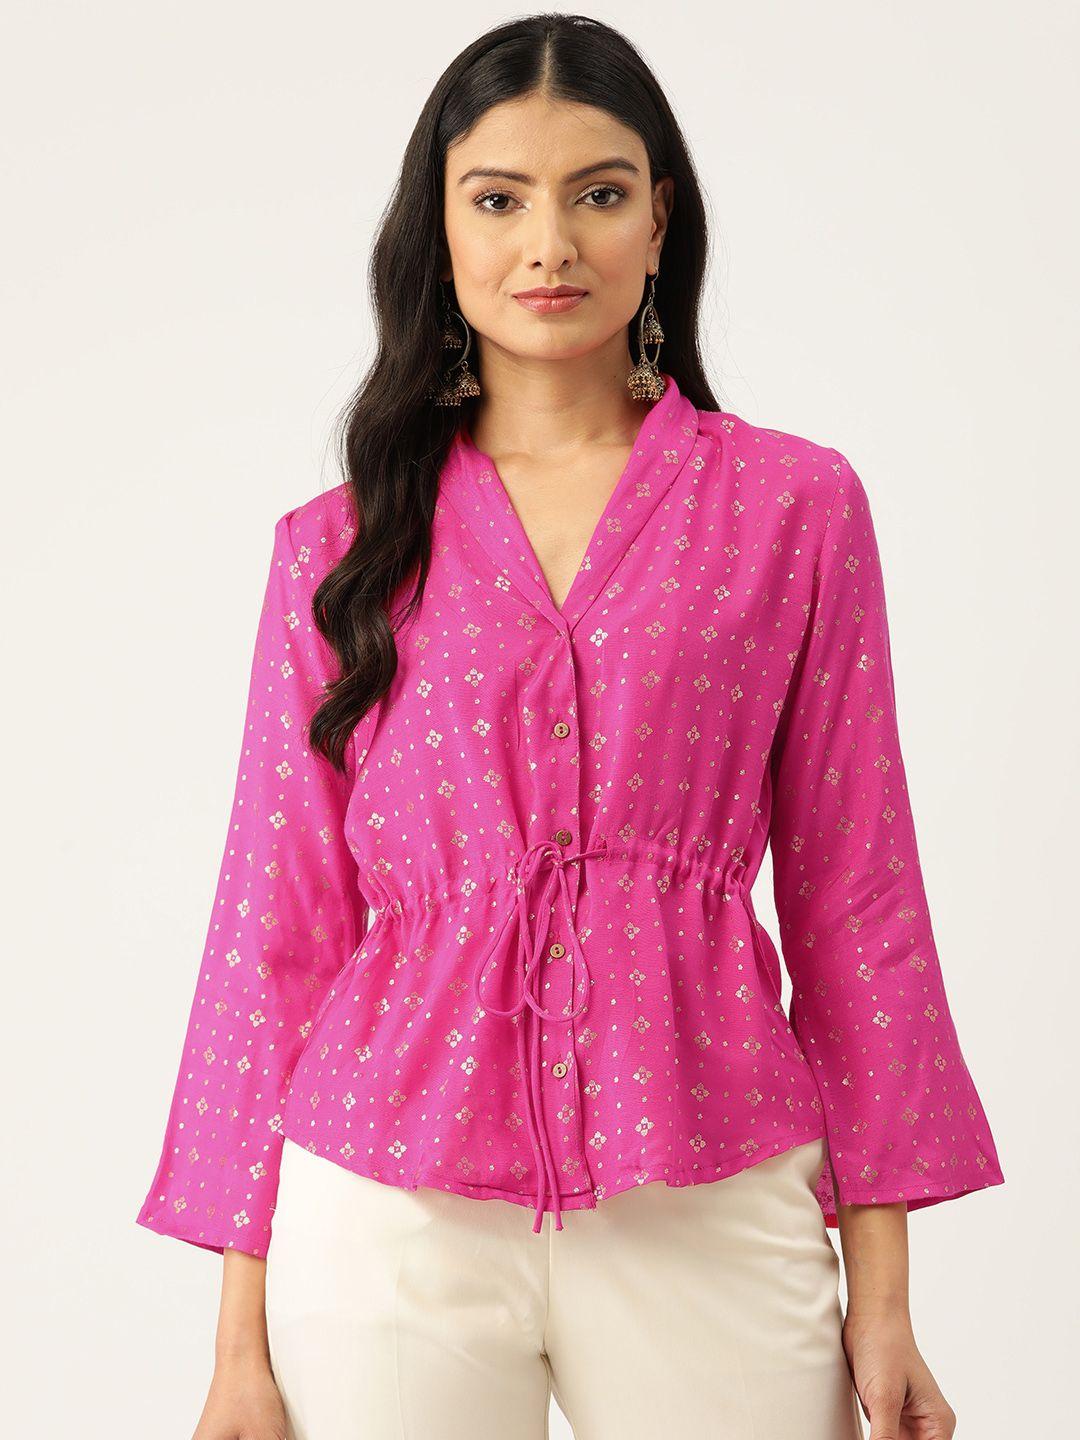 zizo by namrata bajaj ethnic motifs print slit sleeves liva ethnic top